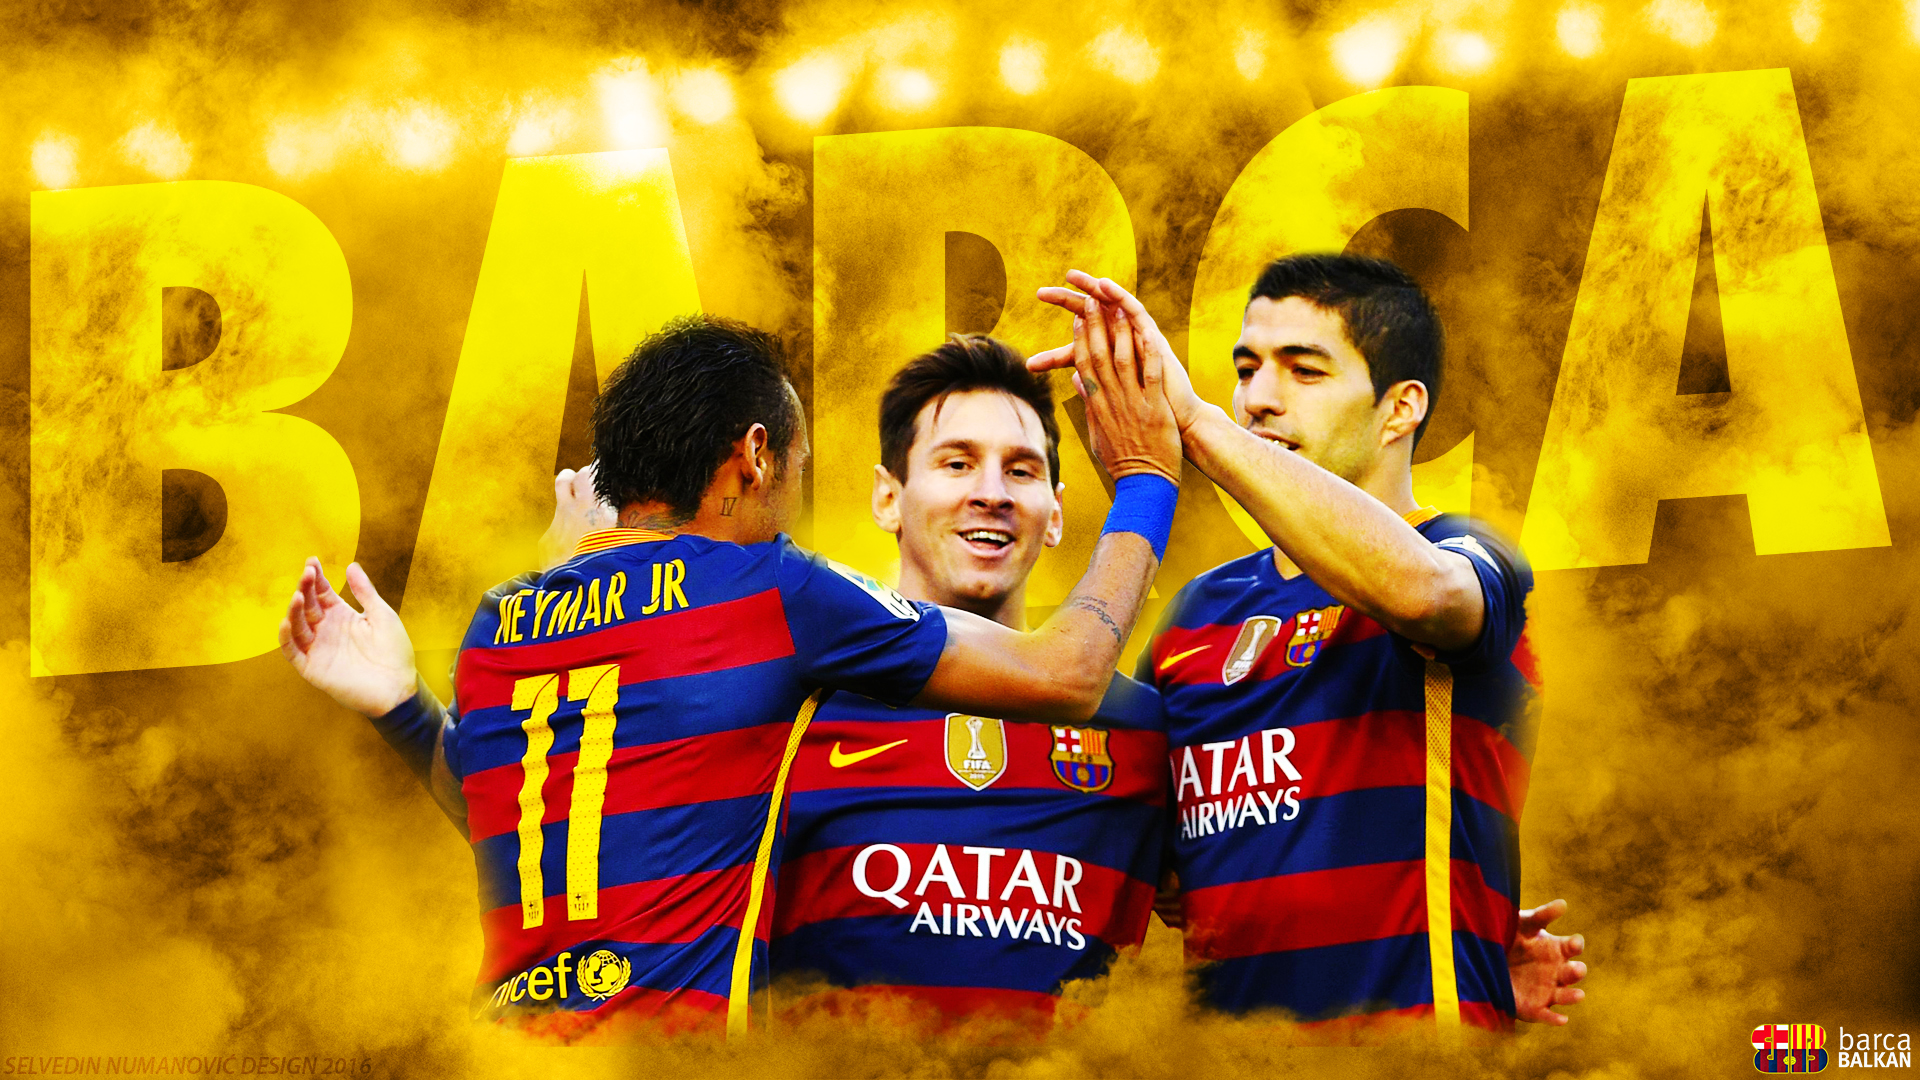 Messi Suarez Neymar HD Wallpaper By Selvedinfcb